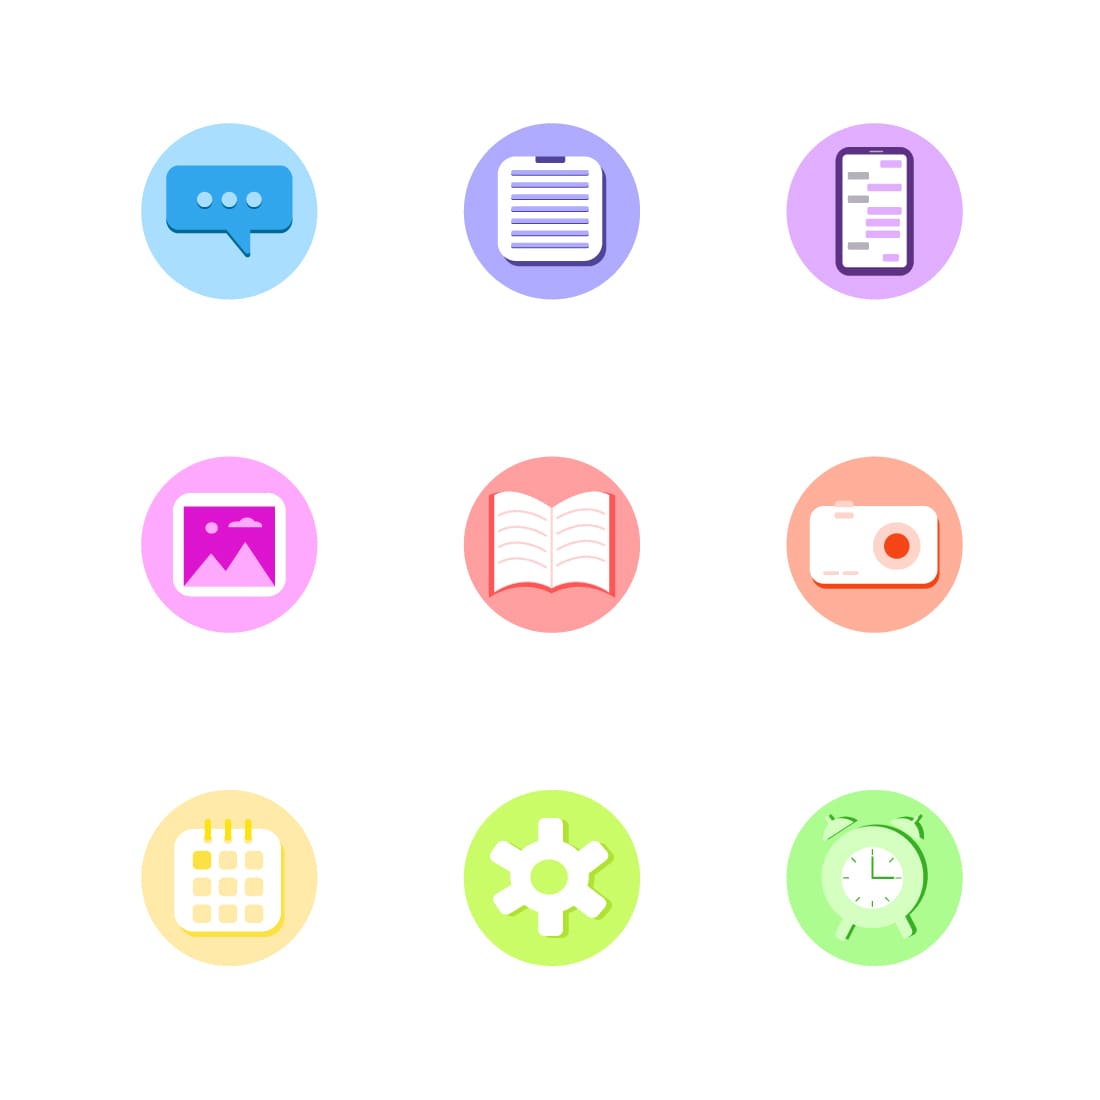 Aesthetic App Icons Free 02.